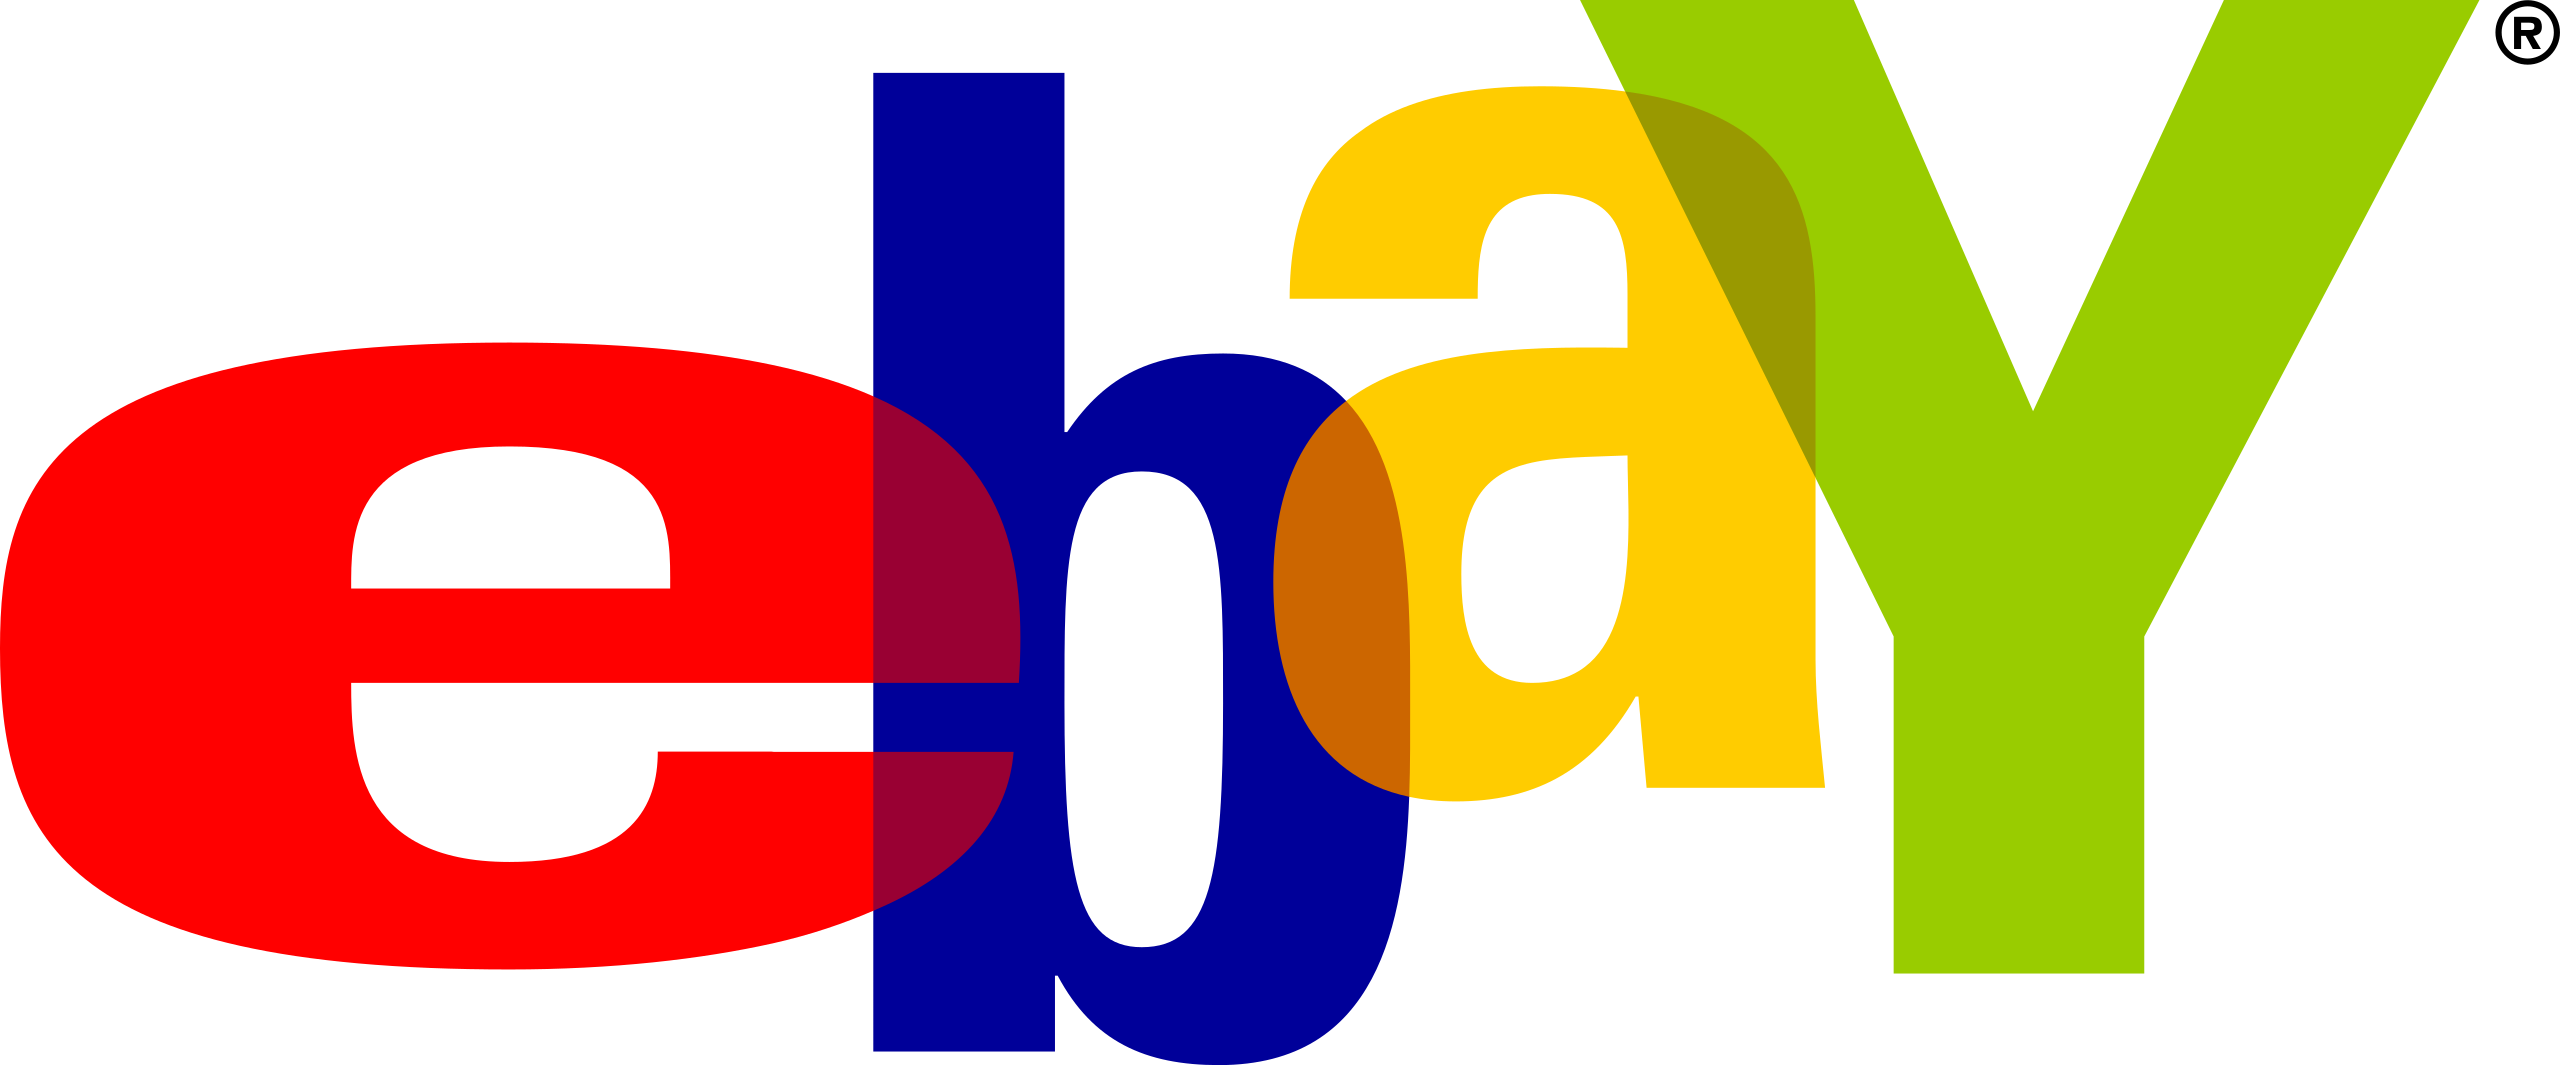 eBay_former_logo